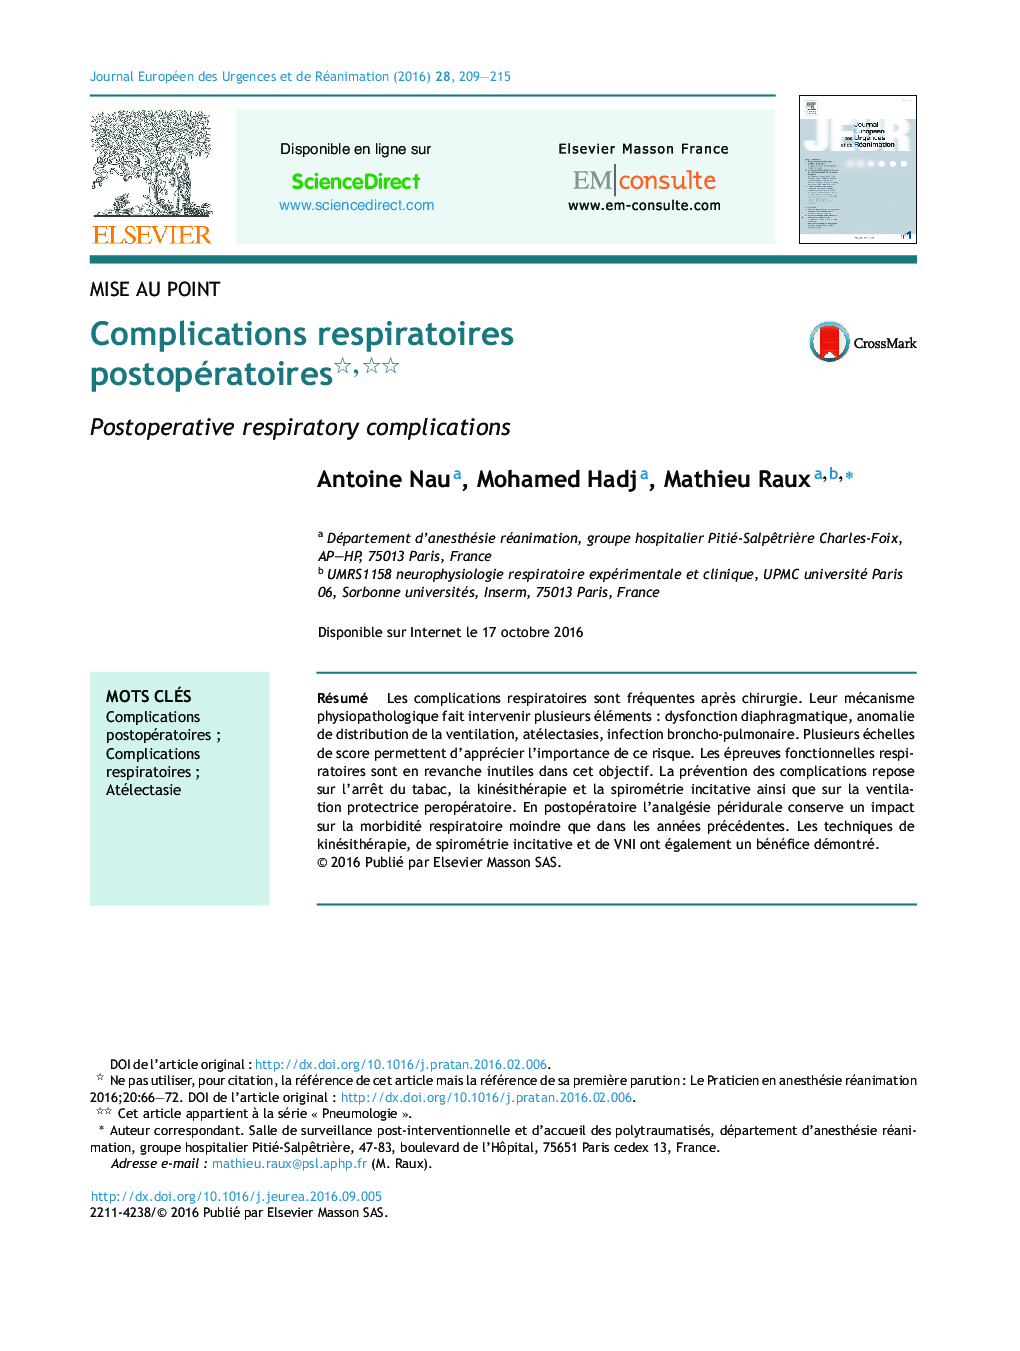 Complications respiratoires postopératoires